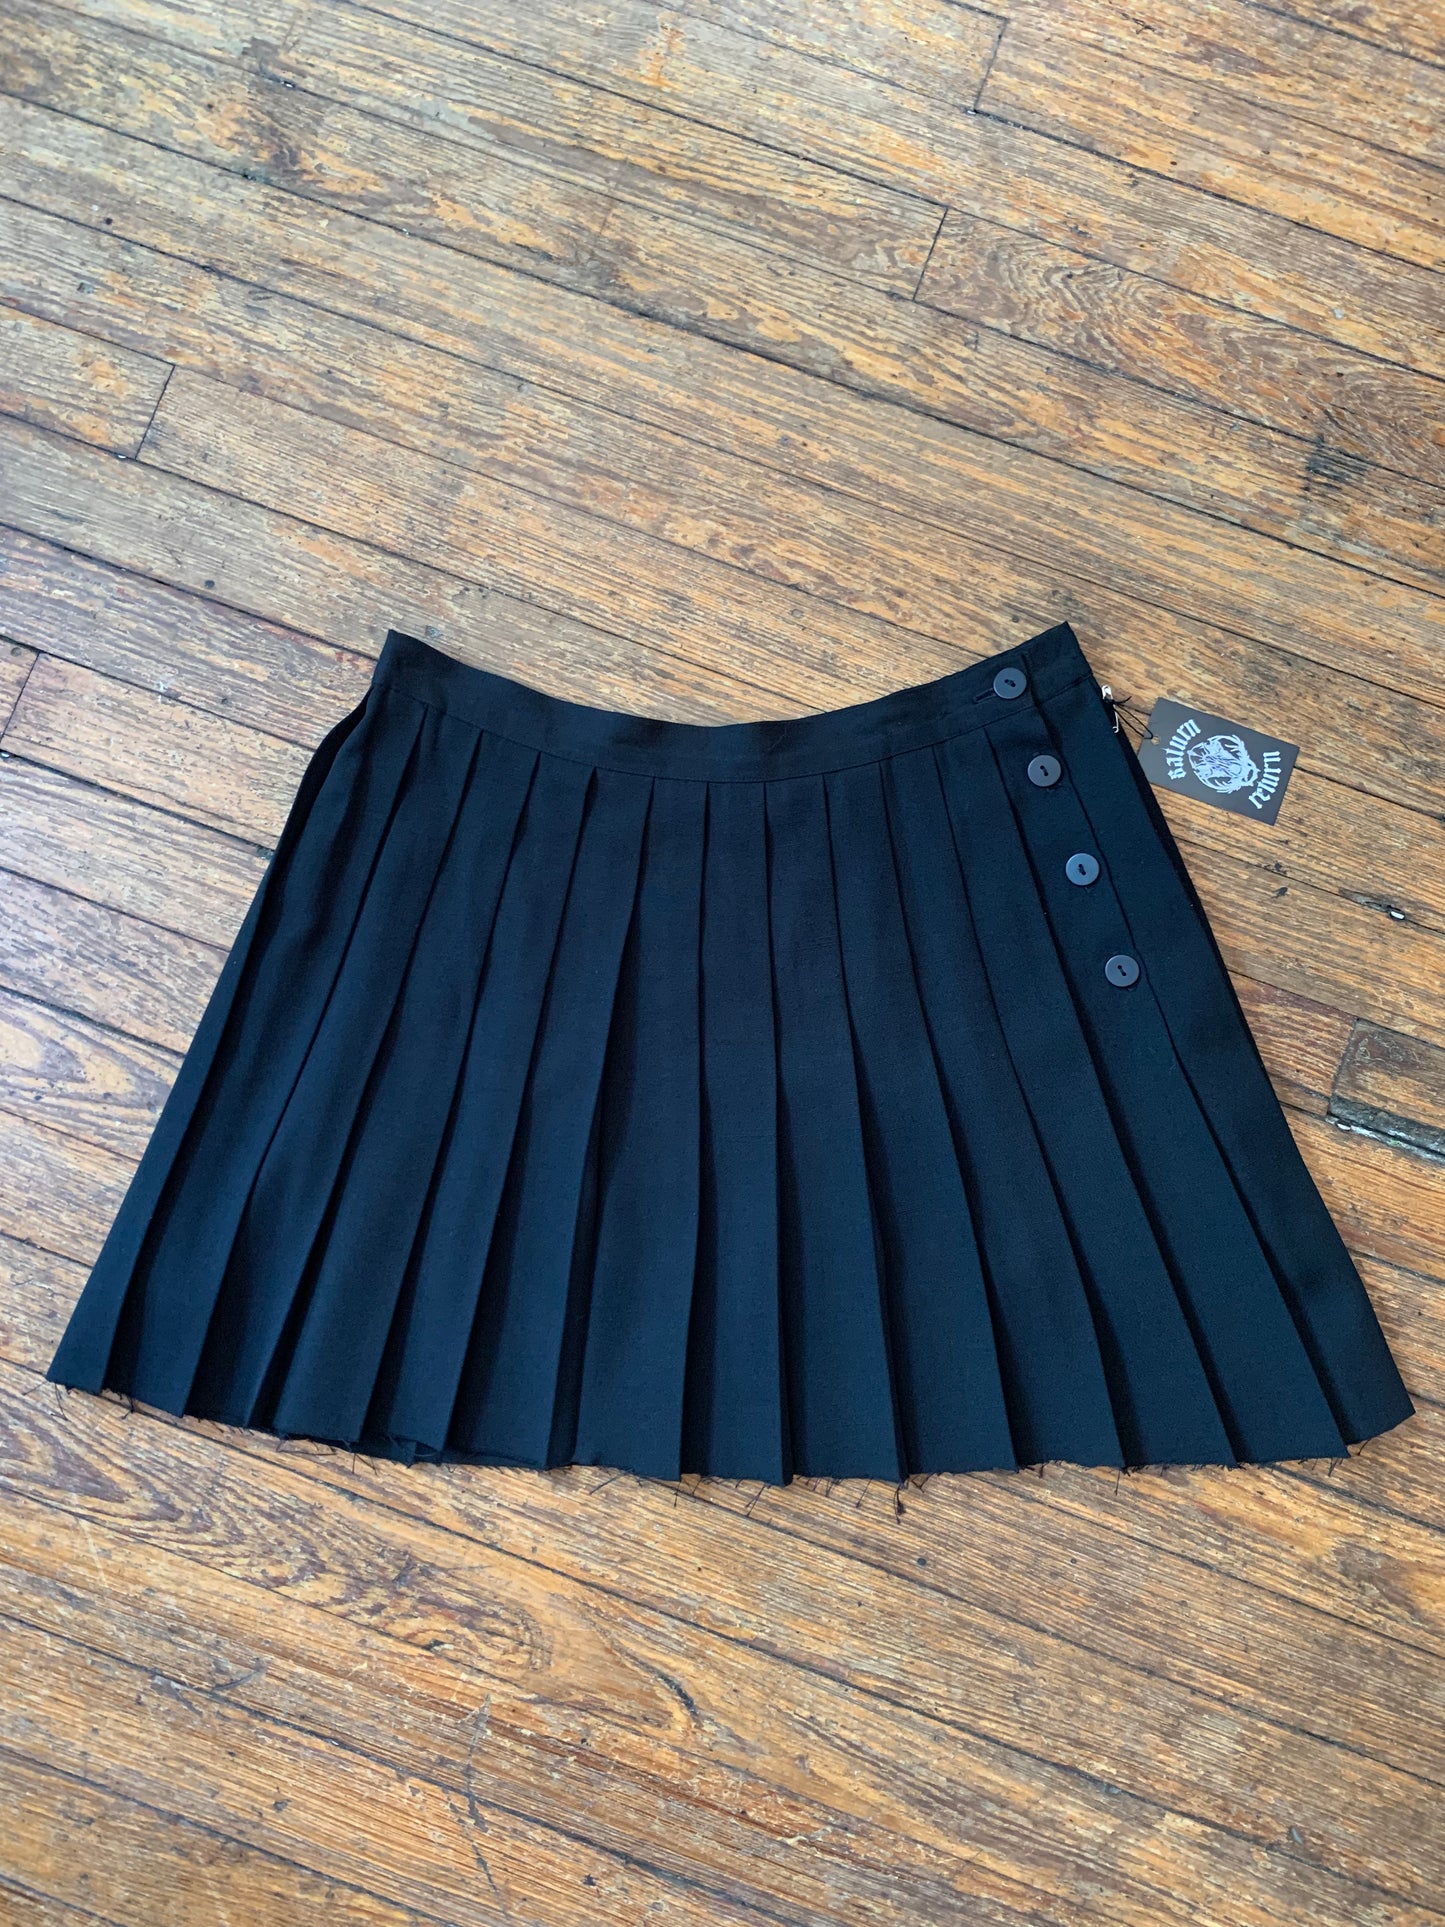 Black Raw Hem Button Tennis Skirt